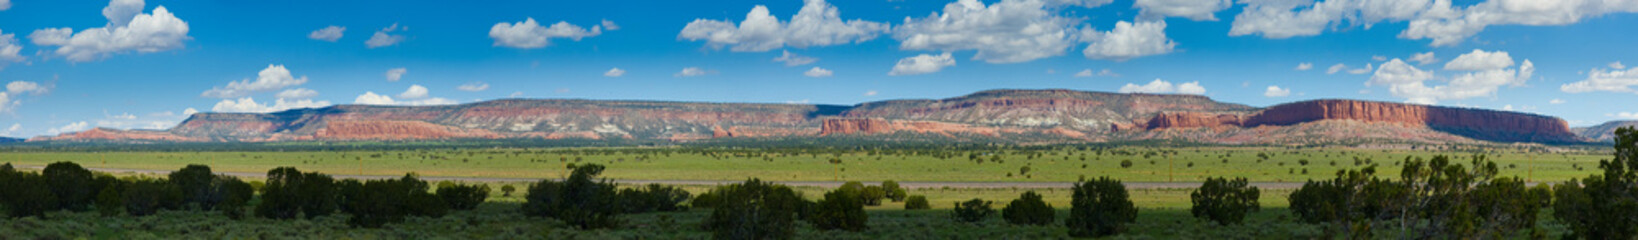 Red mountains of Arizona - panorama